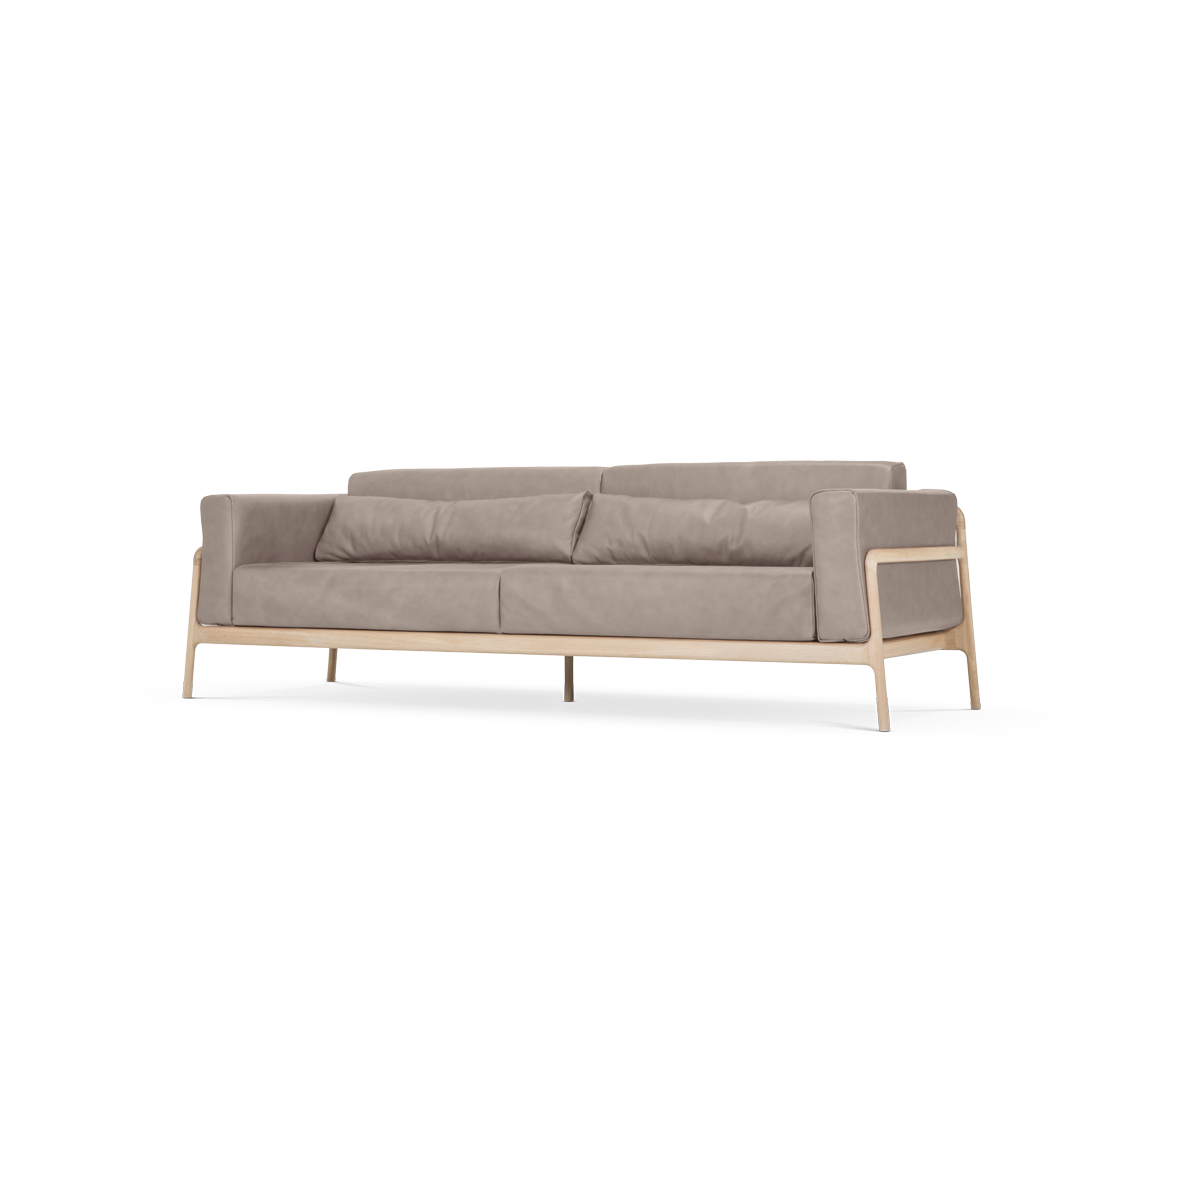 Fawn sofa 3 plus seater bank dakar leather stone 1436 - 240 cm